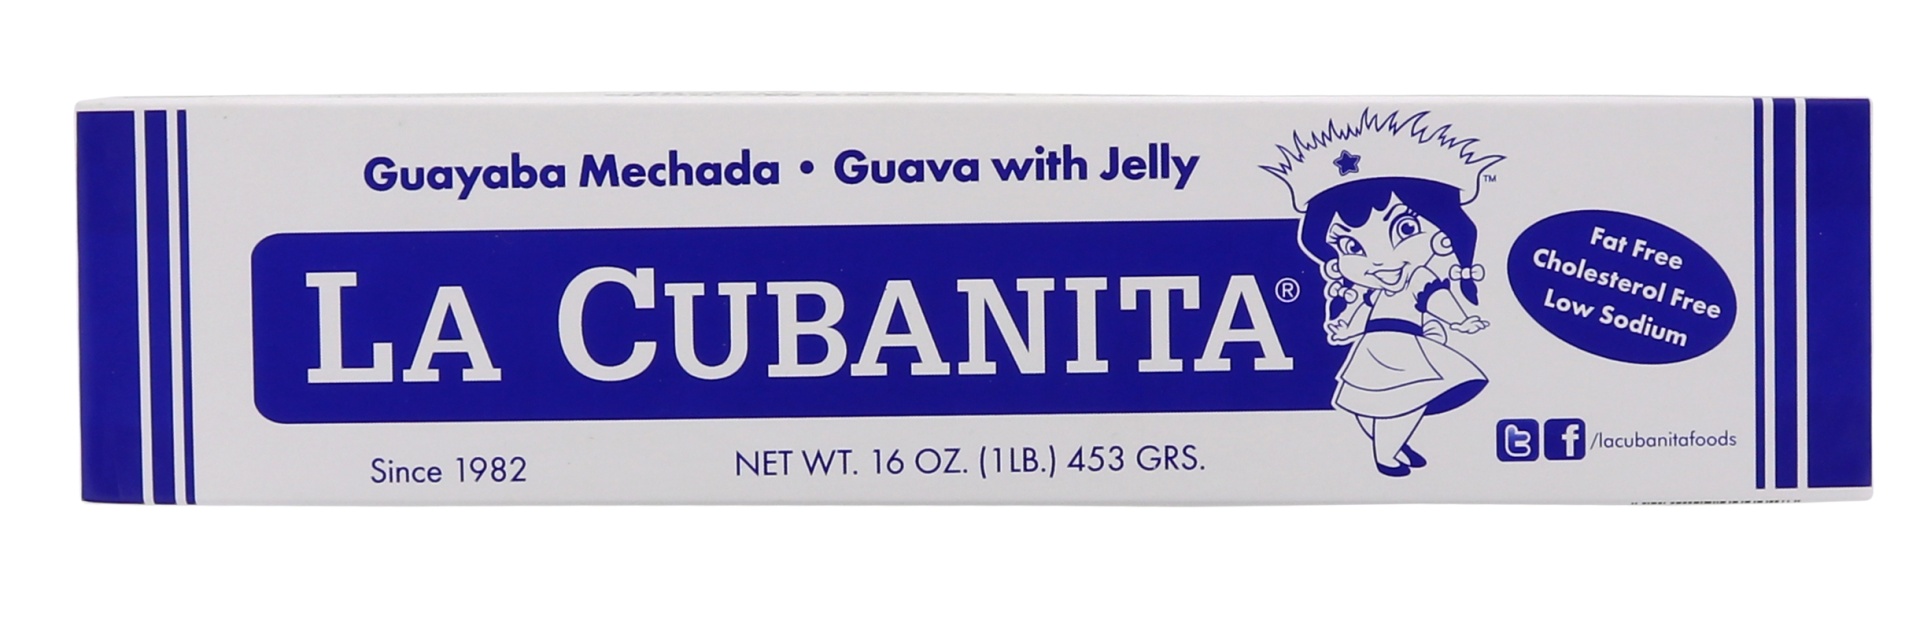 slide 1 of 1, La Cubanita Guayaba Mechada Guava With Jelly, 1 ct